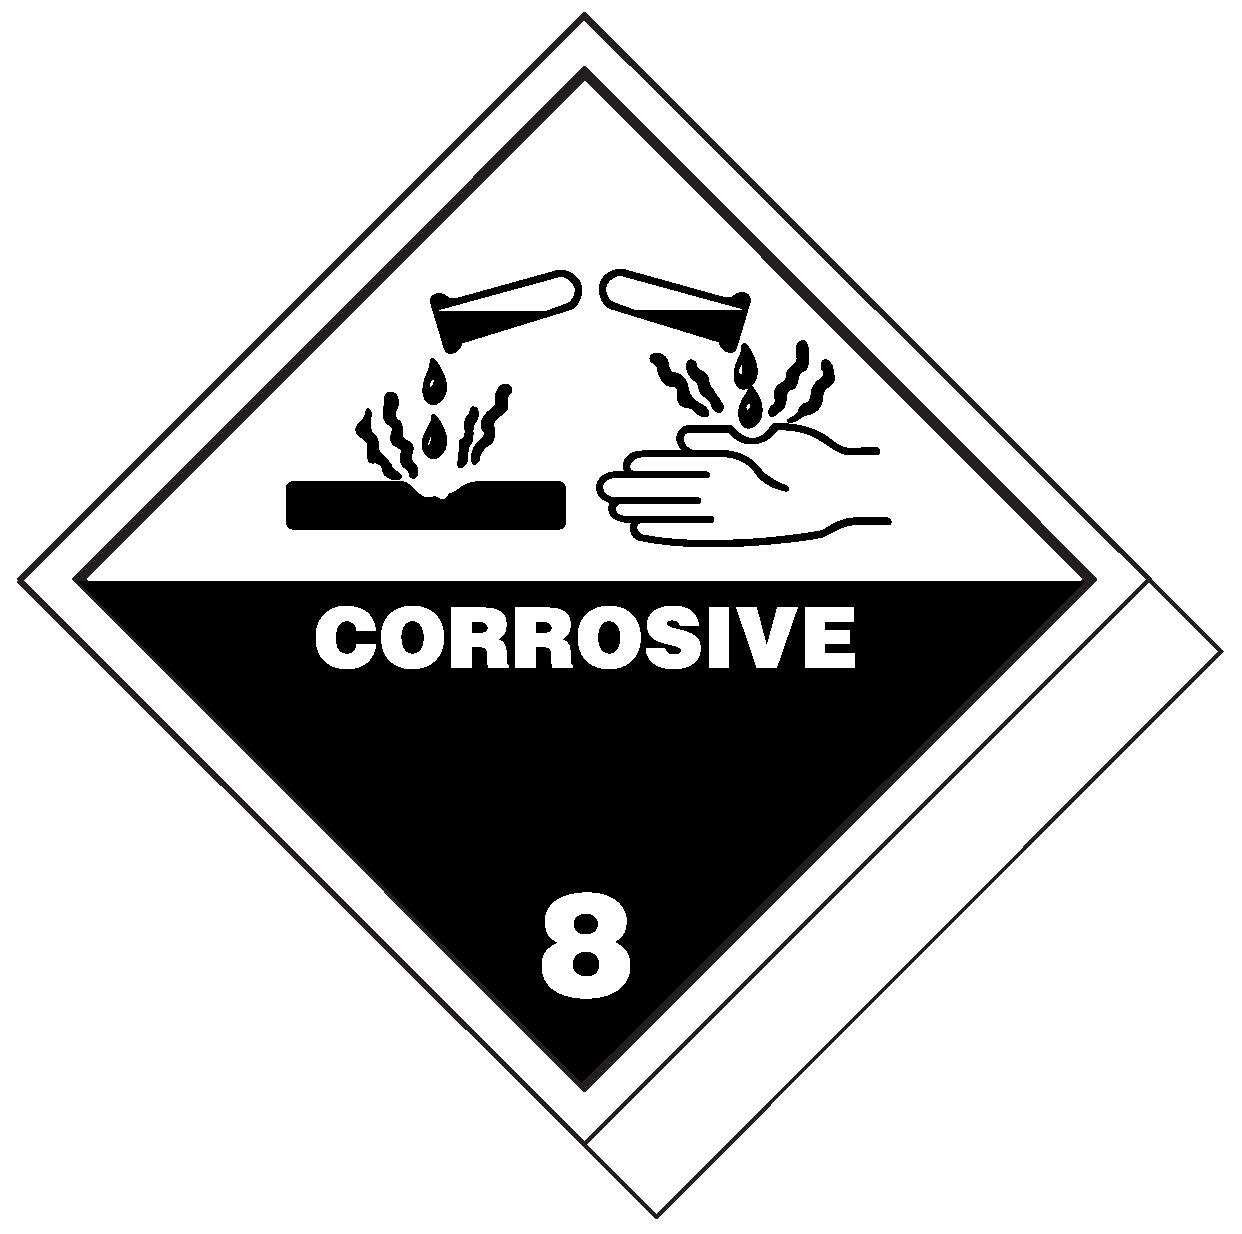 Corrosive Class 8 Label (Blank)